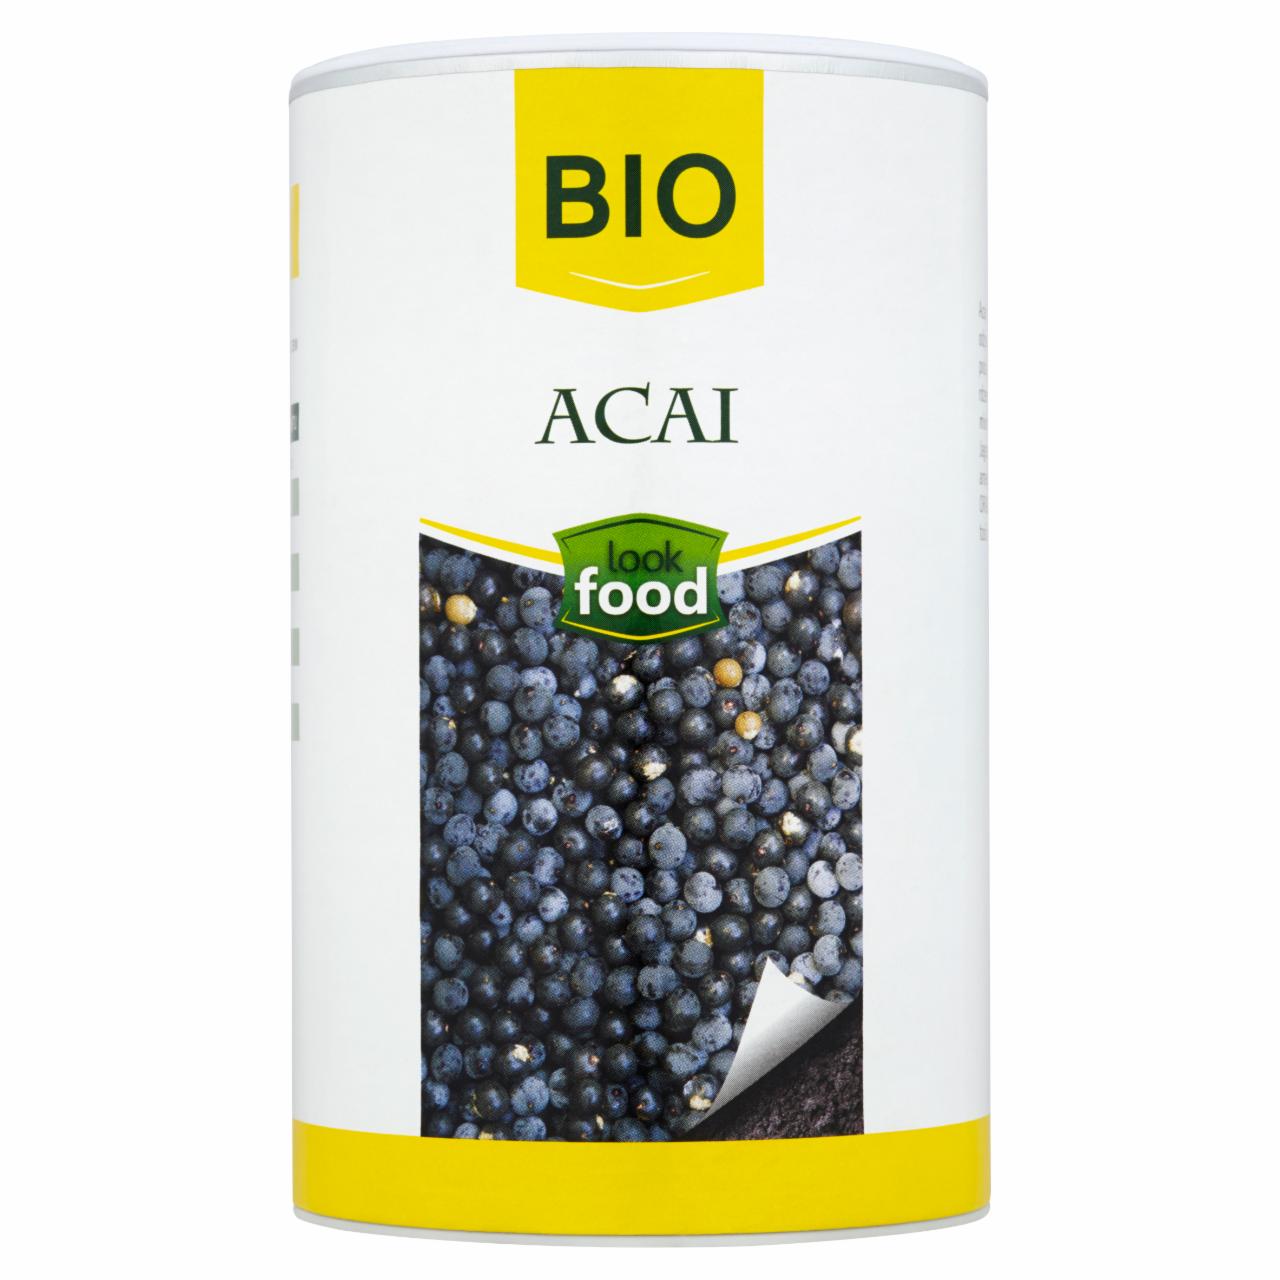 Zdjęcia - Look Food Bio Acai 100 g